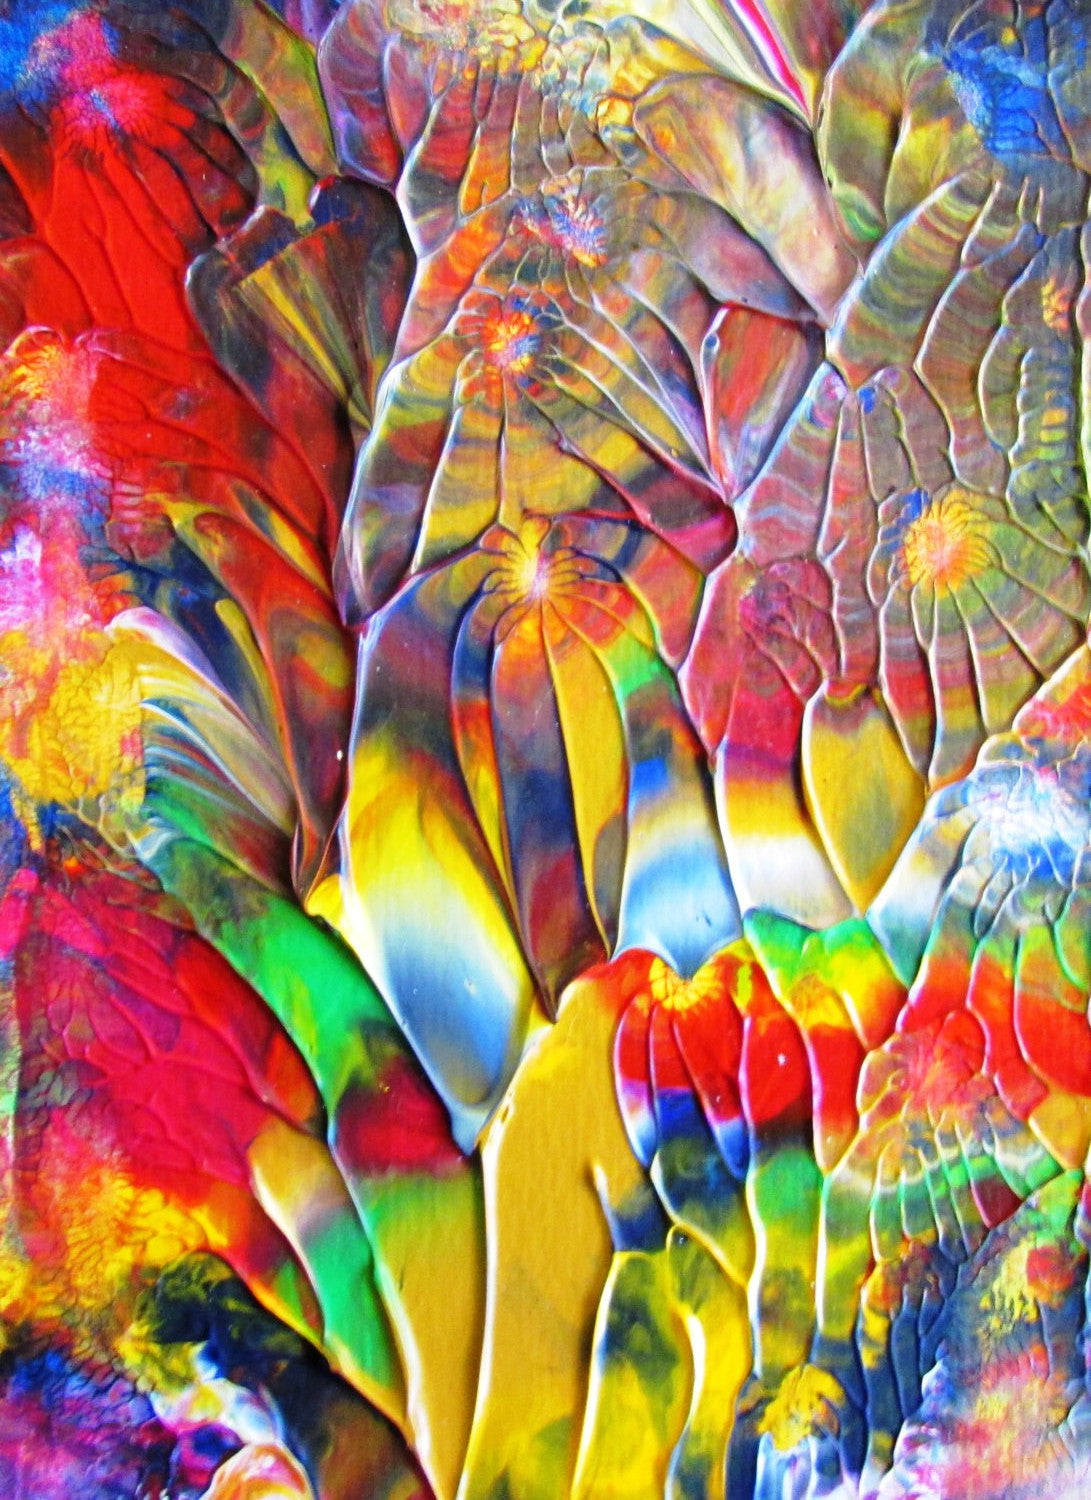 Hippie Sun abstract Acrylic Original Painting